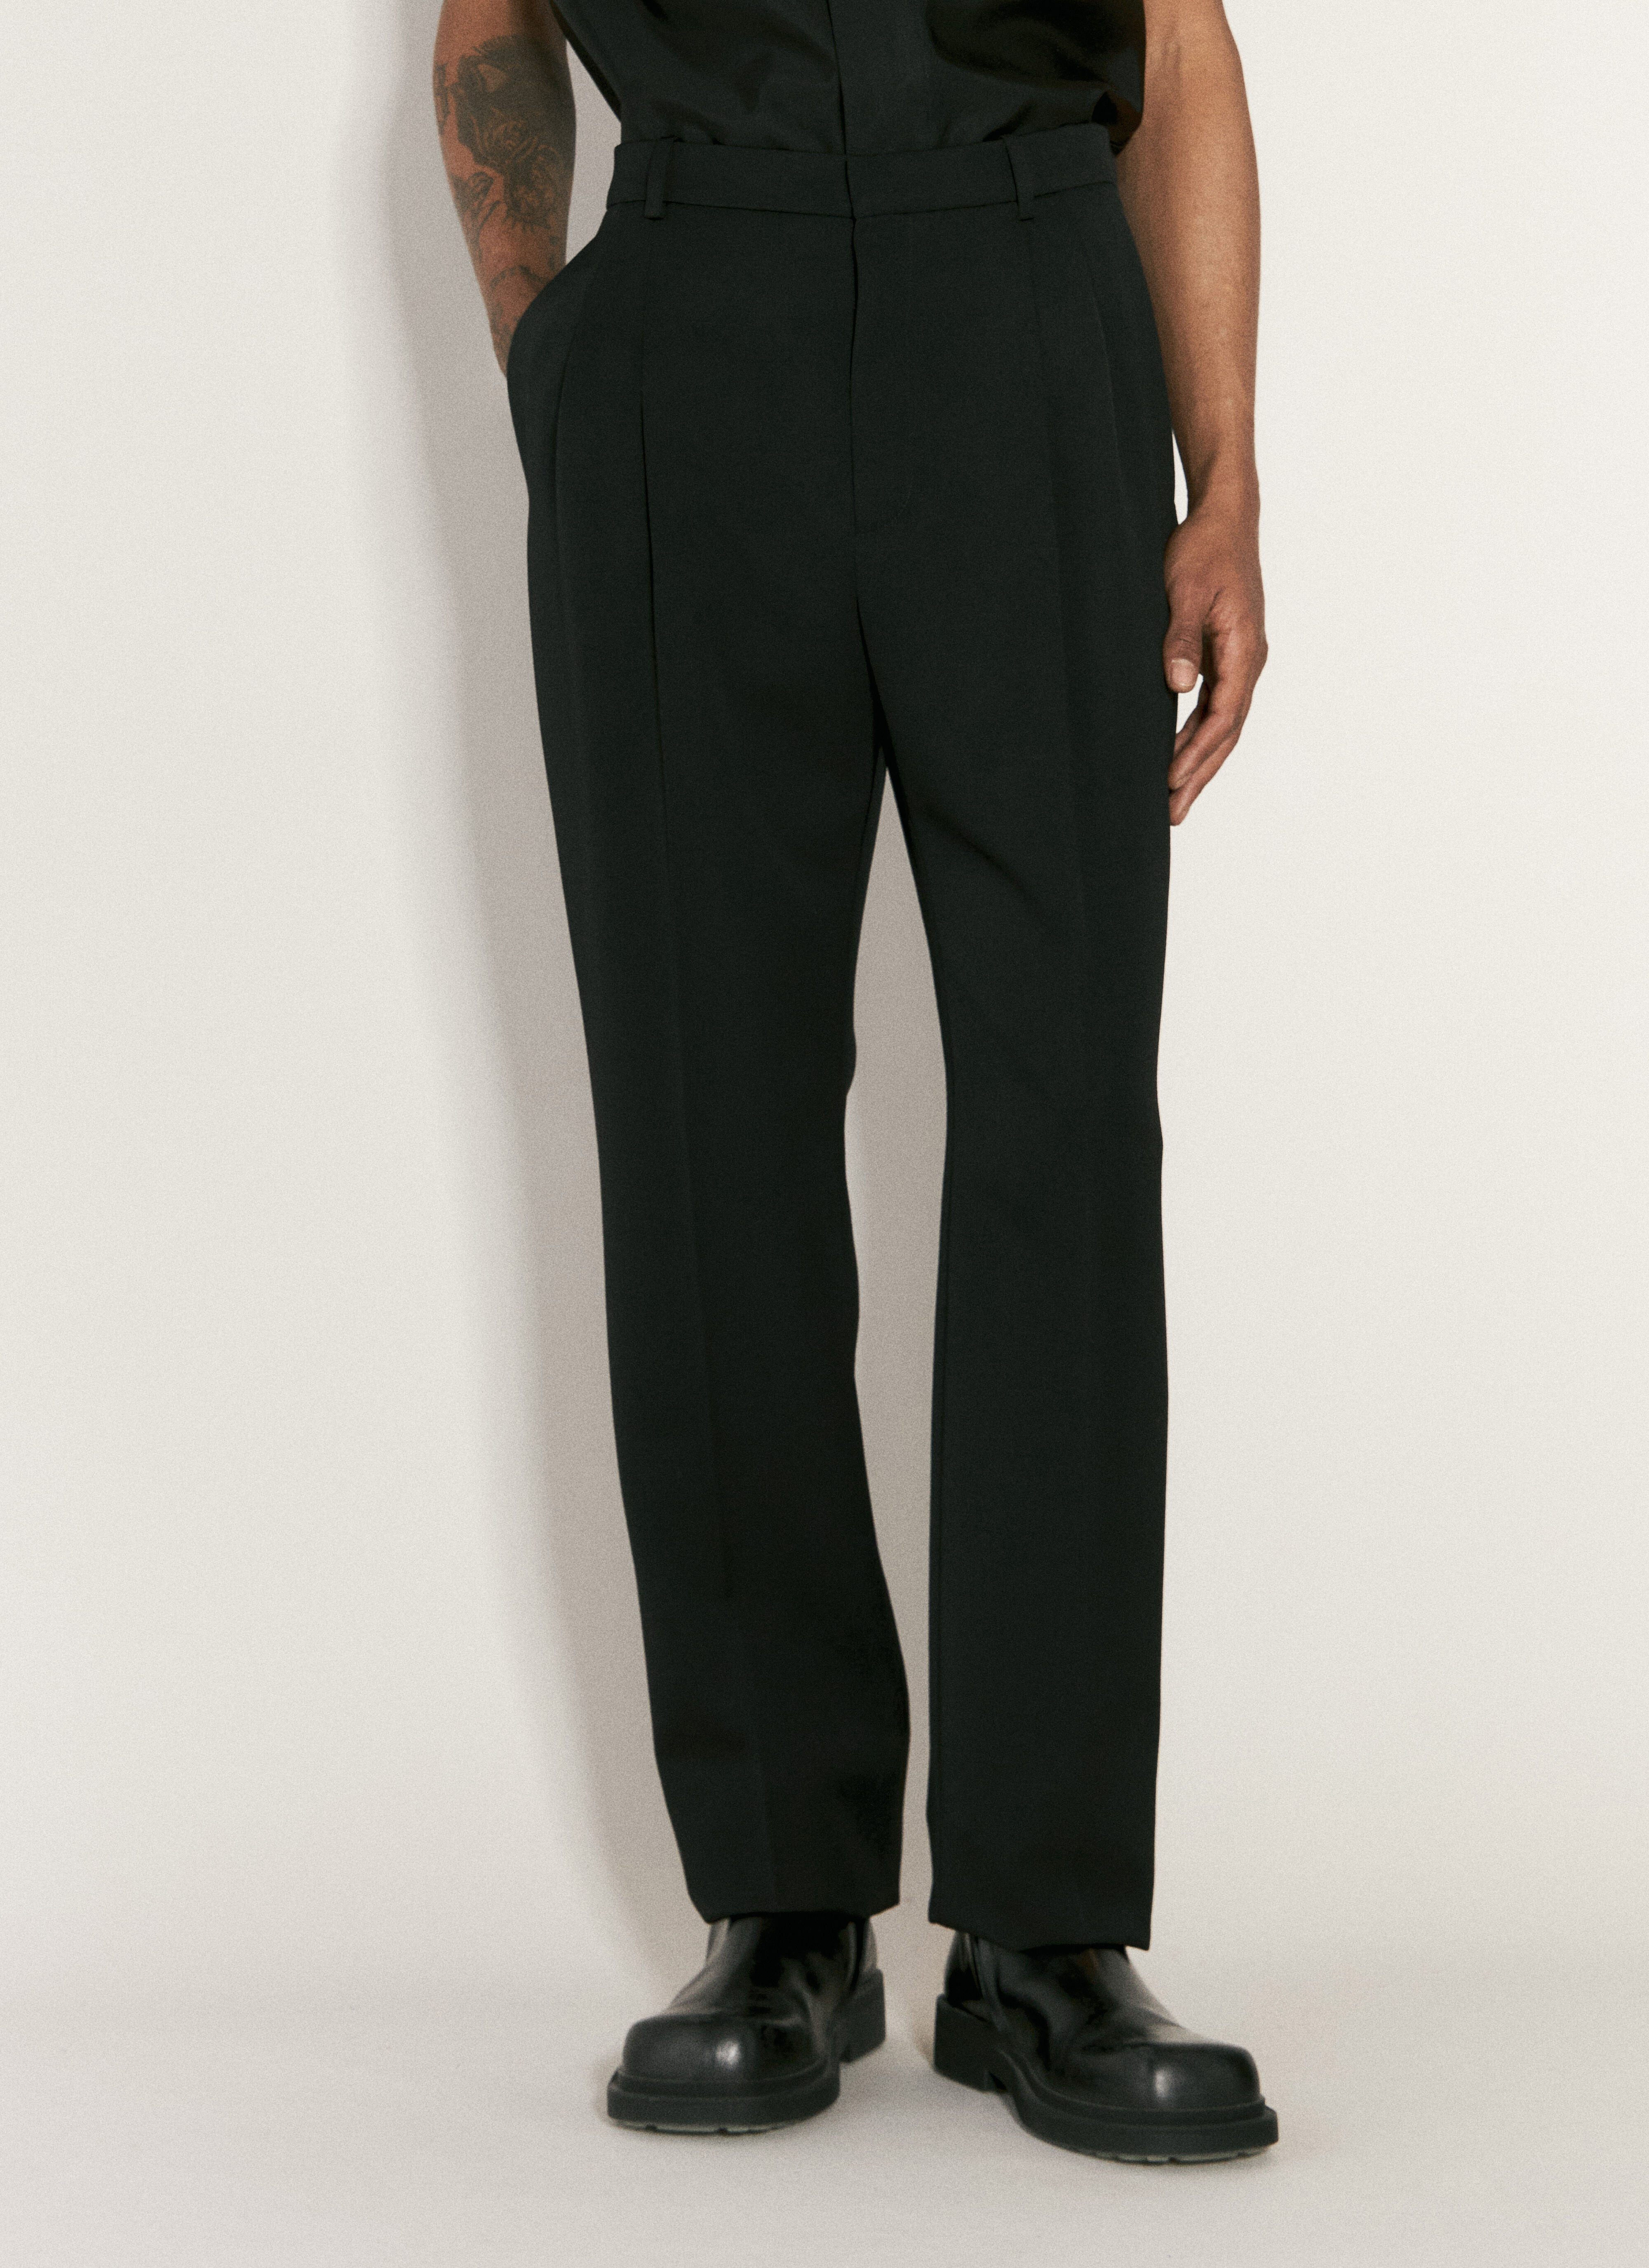 Miista High-Waisted Tailored Pants Black mii0256001